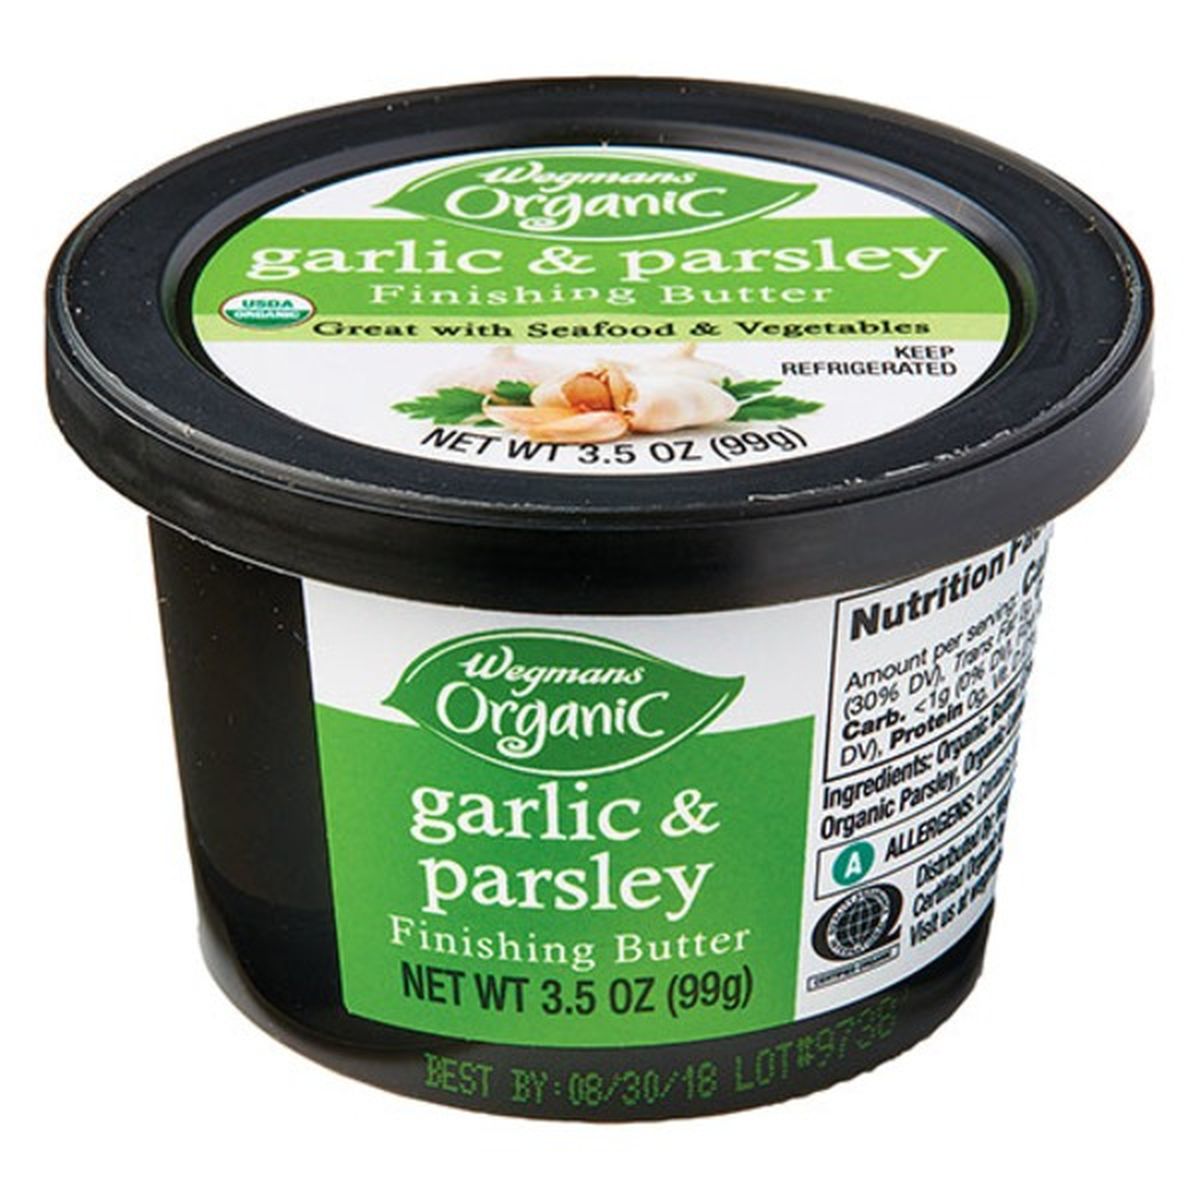 Calories in Wegmans Organic Garlic & Parsley Finishing Butter